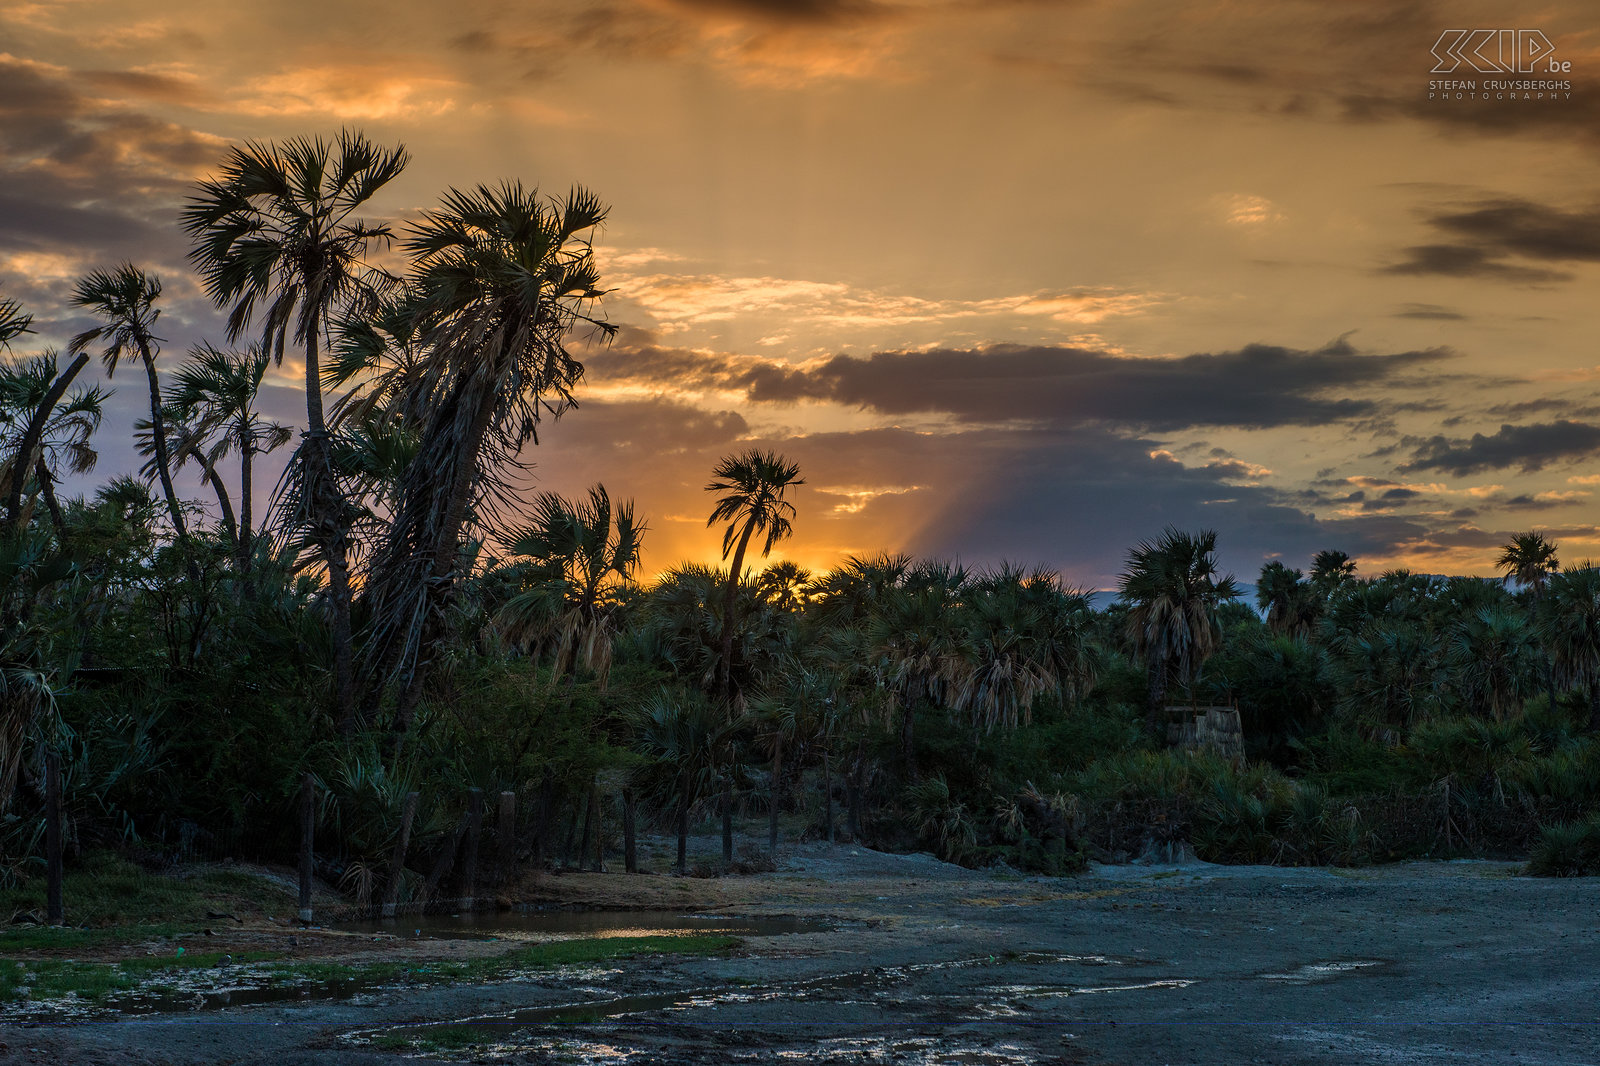 Loiyangalani - Zonsopgang Fantastische zonsopgang in de palm oase van Loiyangalani. Stefan Cruysberghs